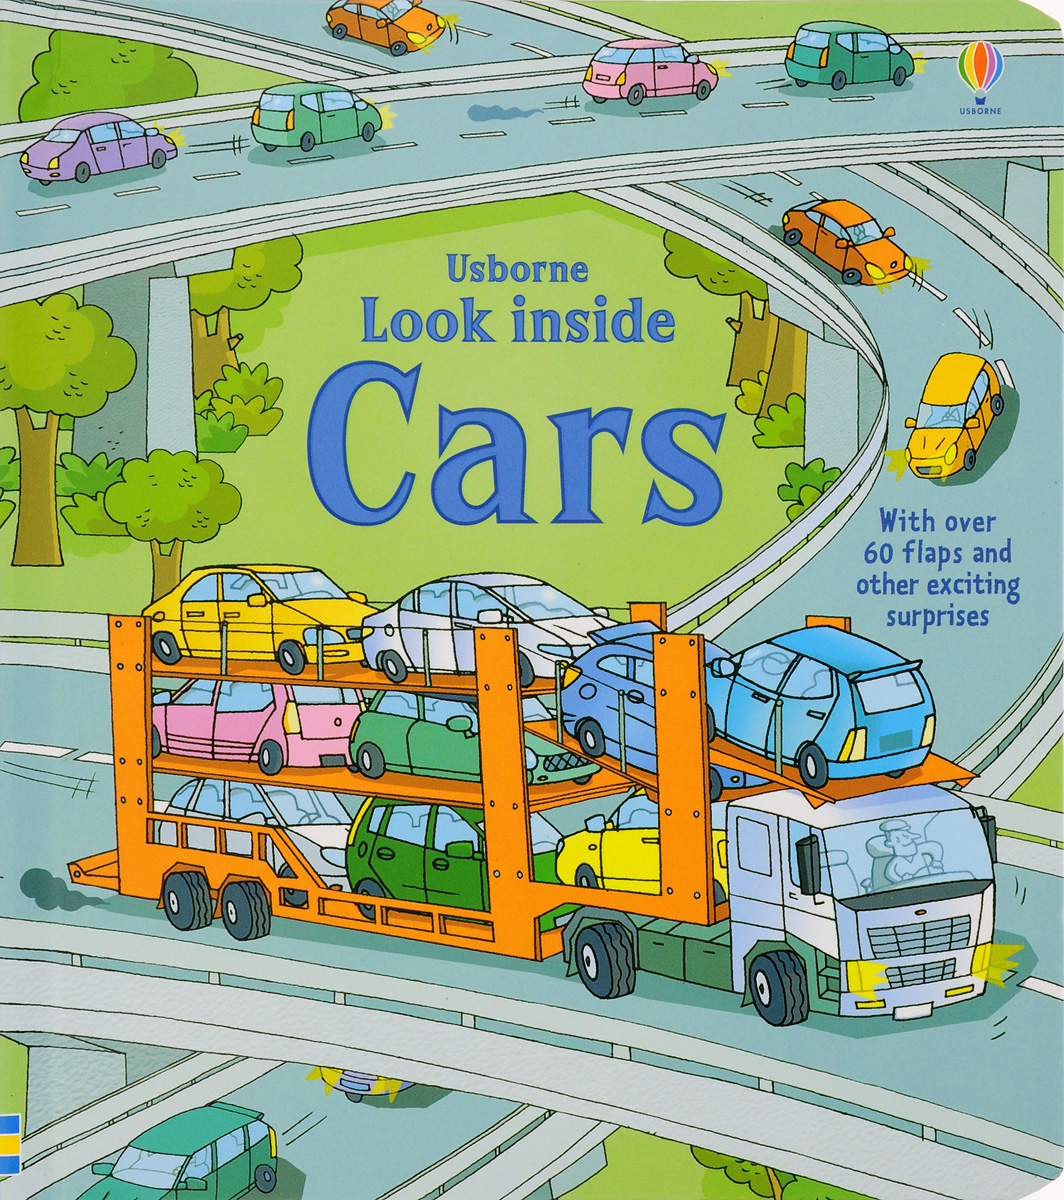 Look inside Cars